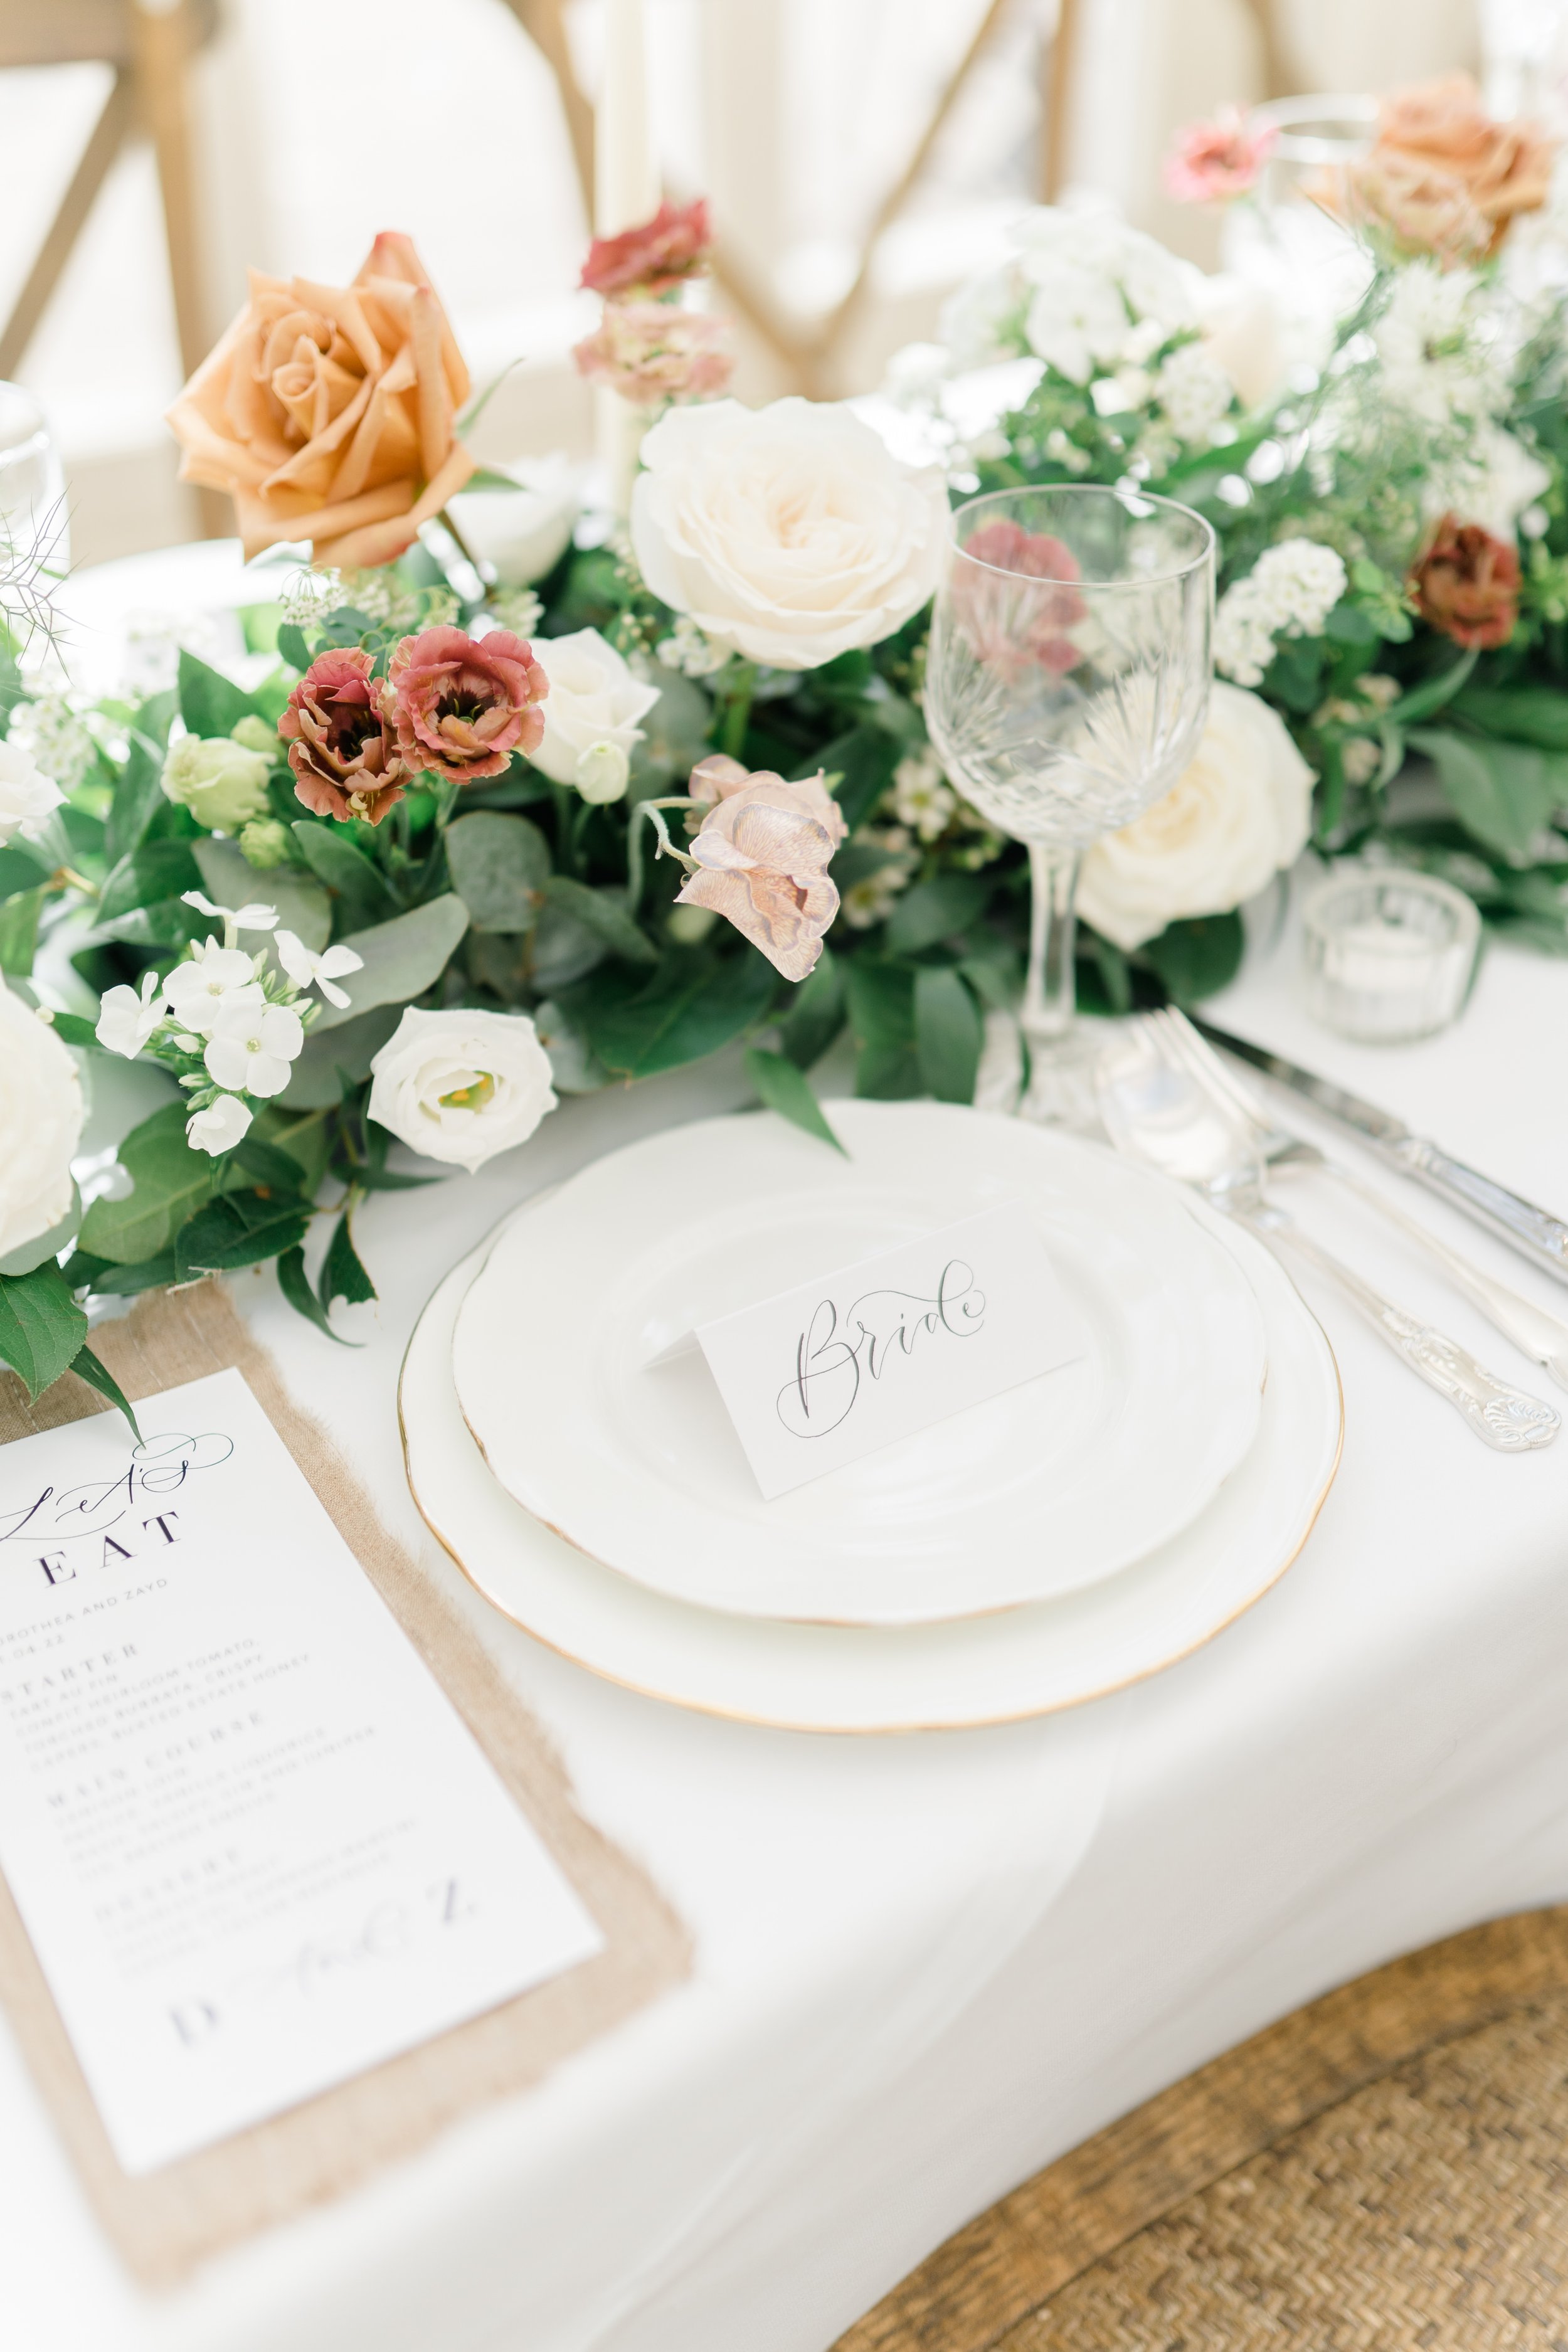 Let's eat - monochrome wedding stationery - minimalist wedding decor - individual wedding menus with calligraphy and monogram